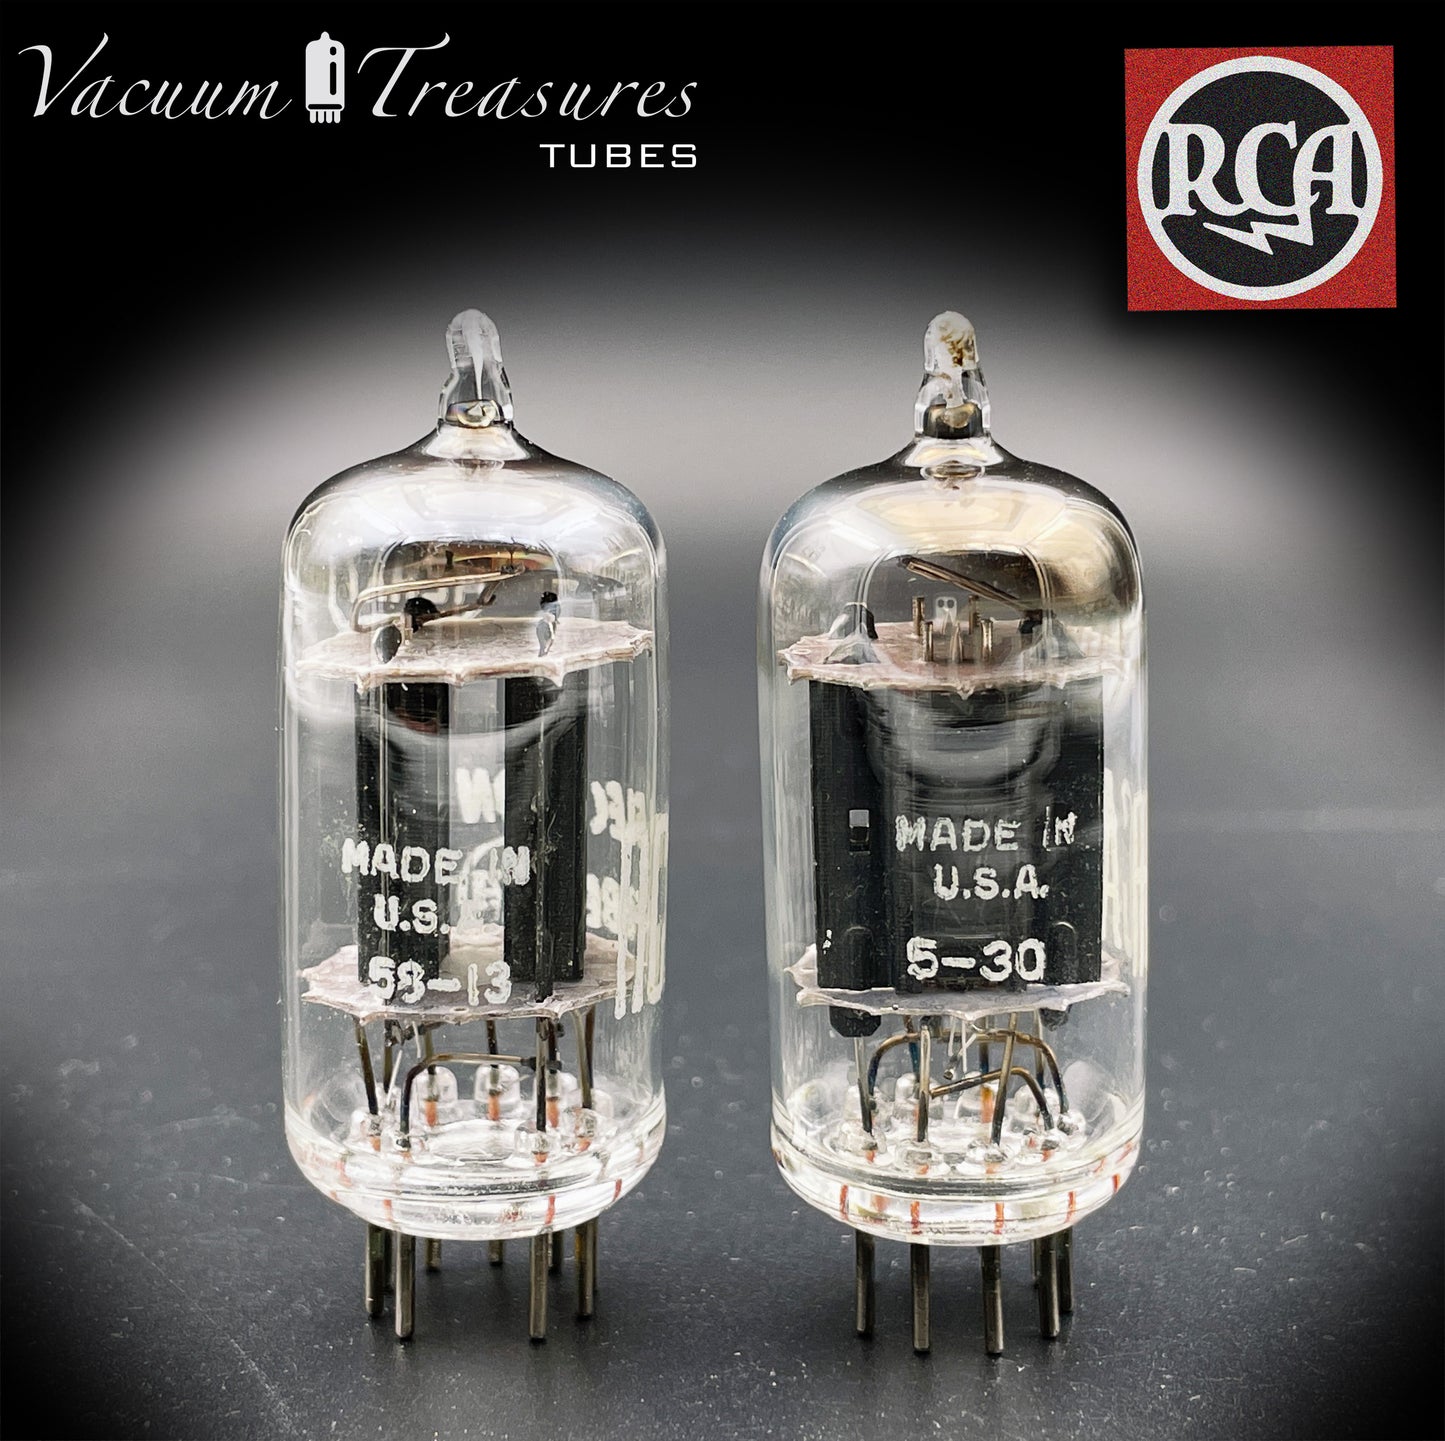 12AX7 (ECC83) RCA NOS lange schwarze Platten [gekippte Getter-angepasste Röhren] HERGESTELLT IN den 50er Jahren in den USA